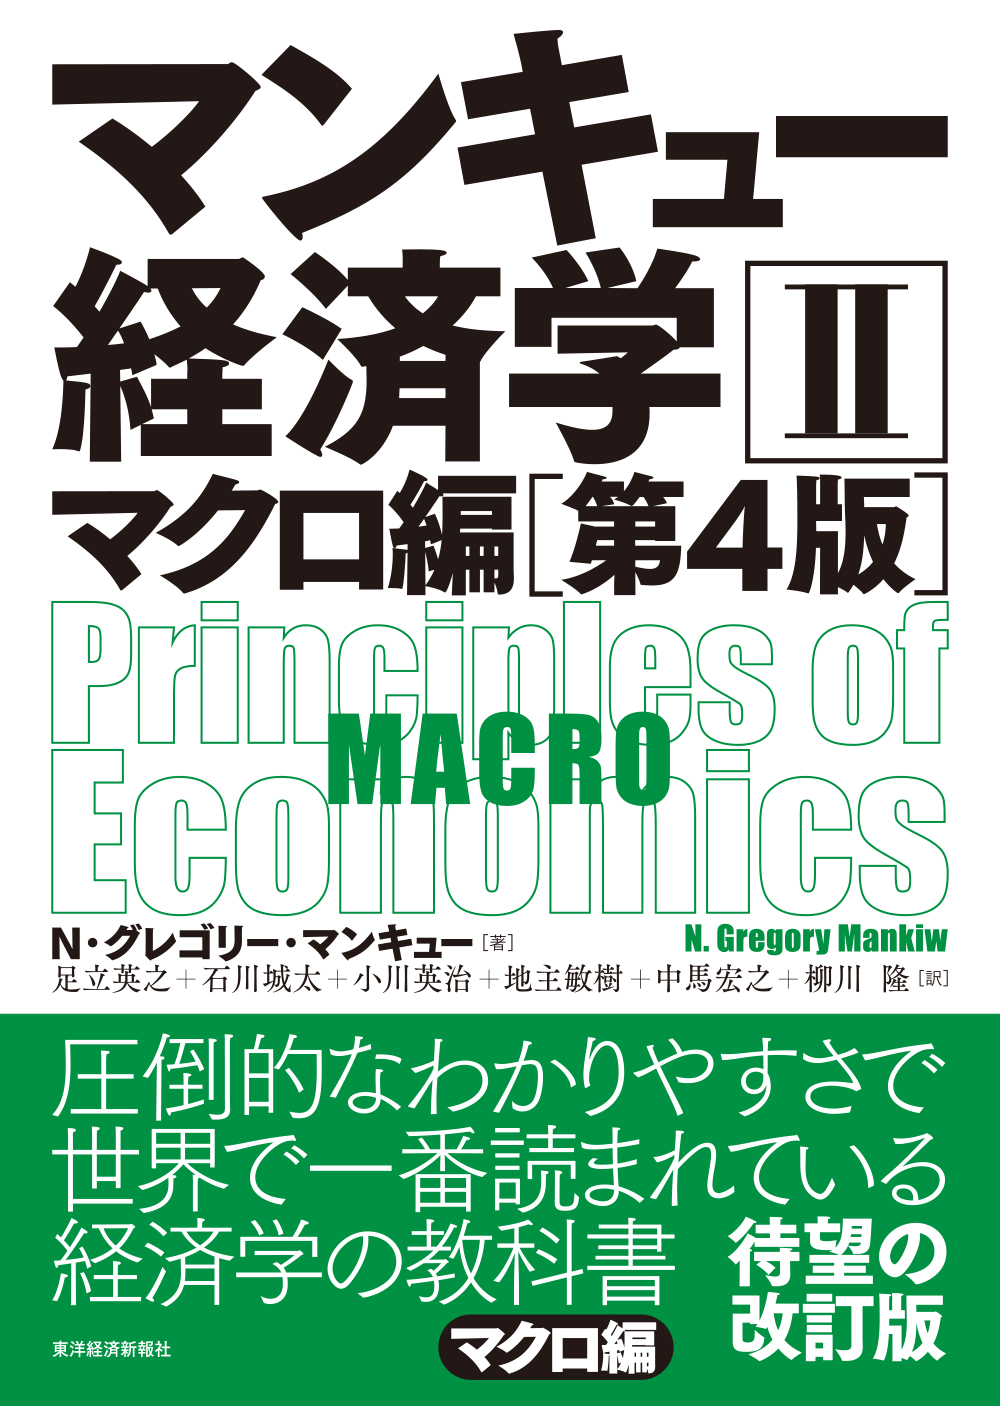 マンキュー 経済学(書籍) - 電子書籍 | U-NEXT 初回600円分無料